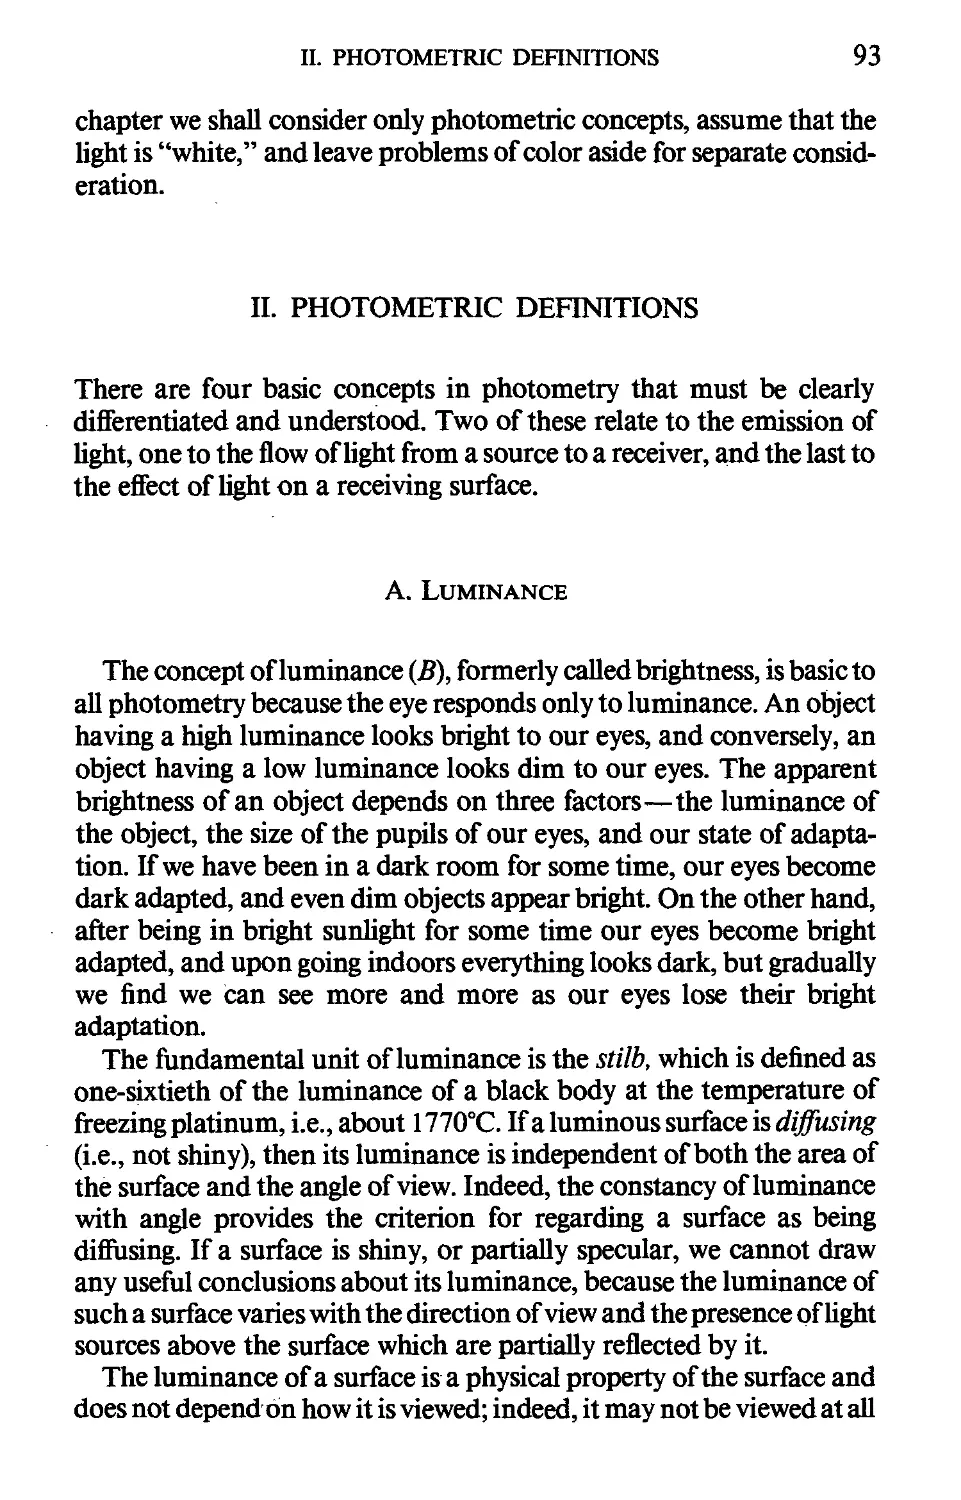 II. Photometric Definitions